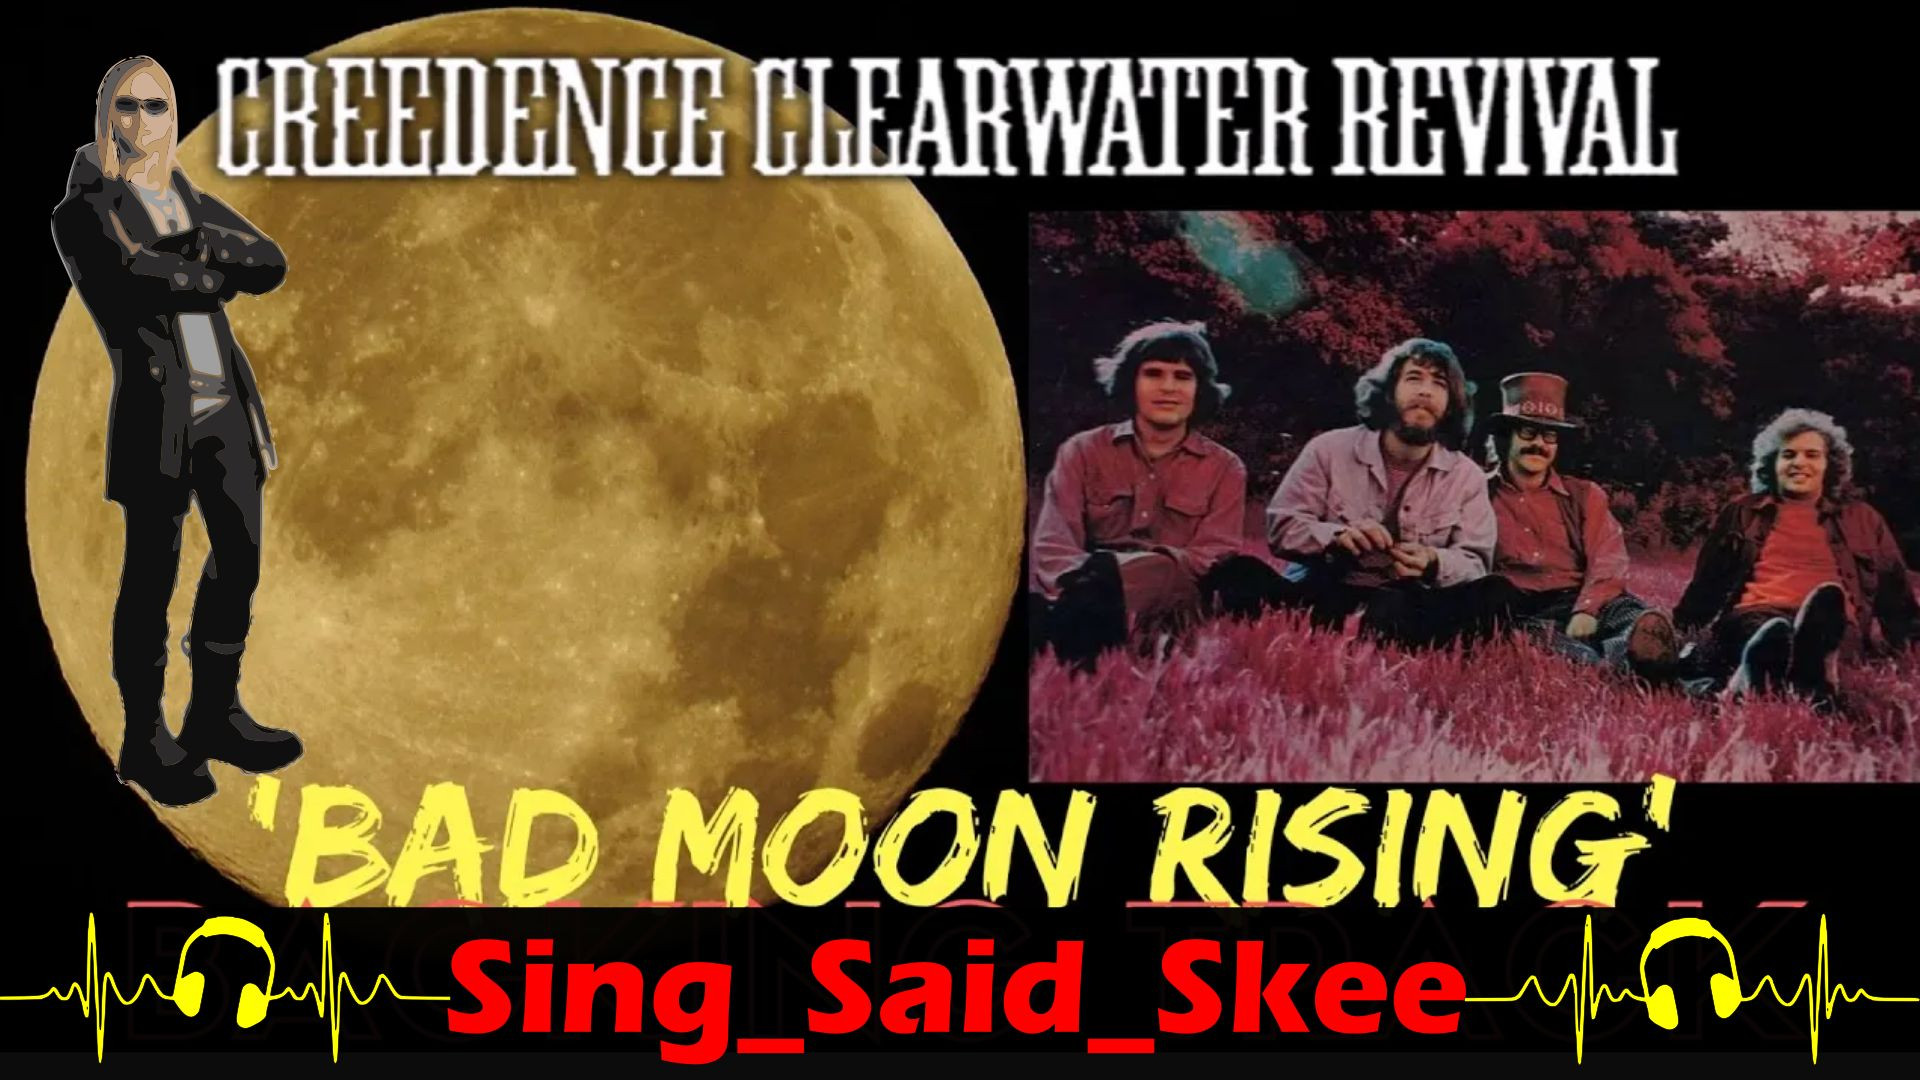 ⁣Bad Moon Rising - Creedence Clearwater Revival - Sing_Said_Skee